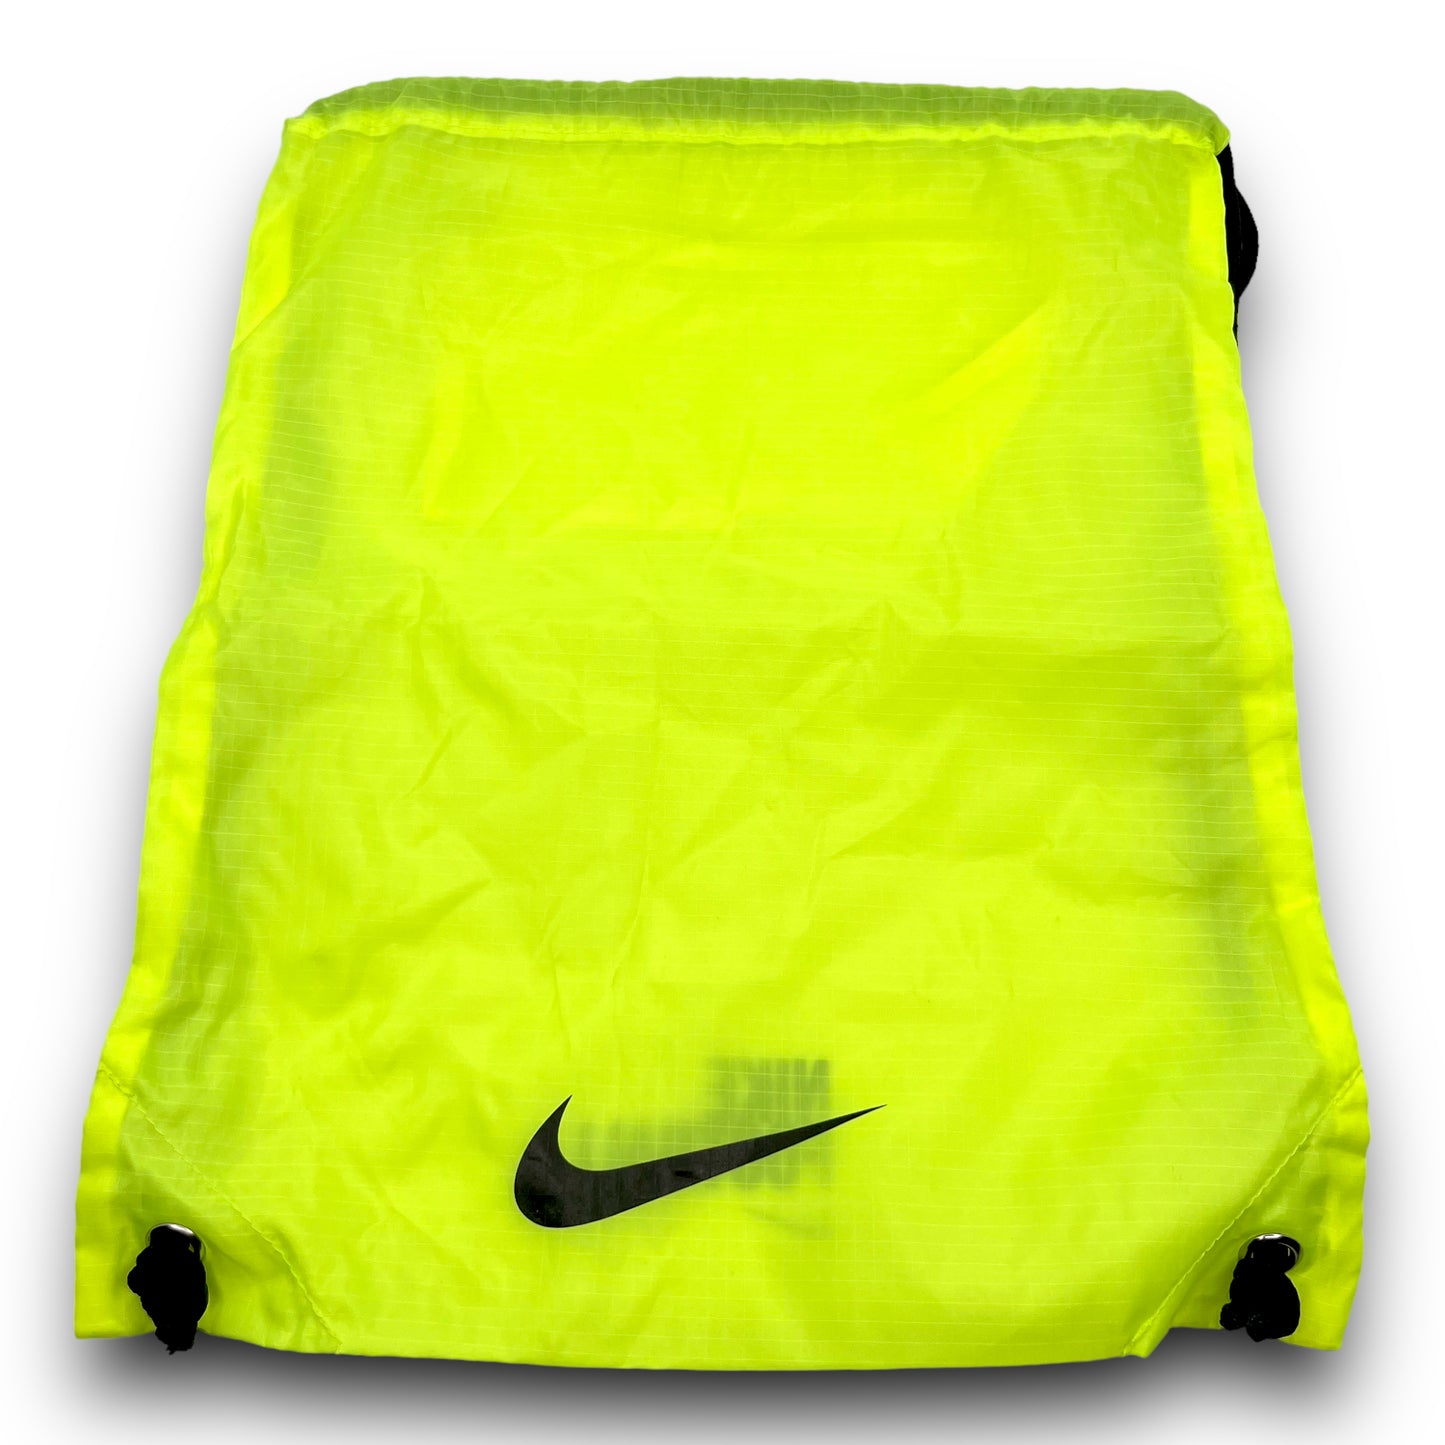 Nike Football Carrying Bag